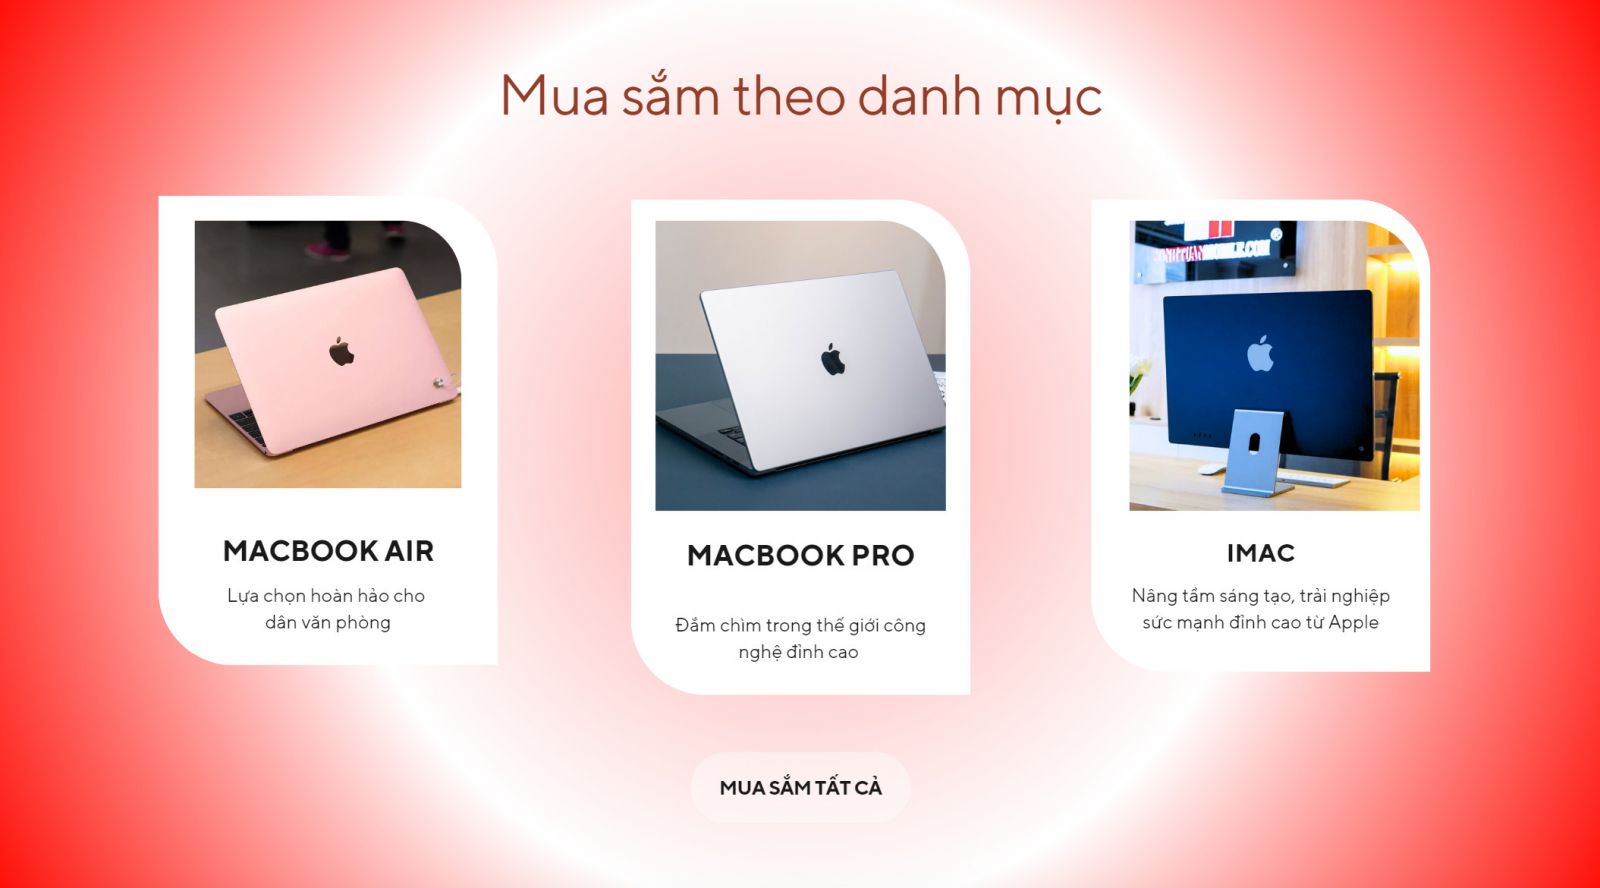 Mua sắm sản phẩm Macbook theo danh mục